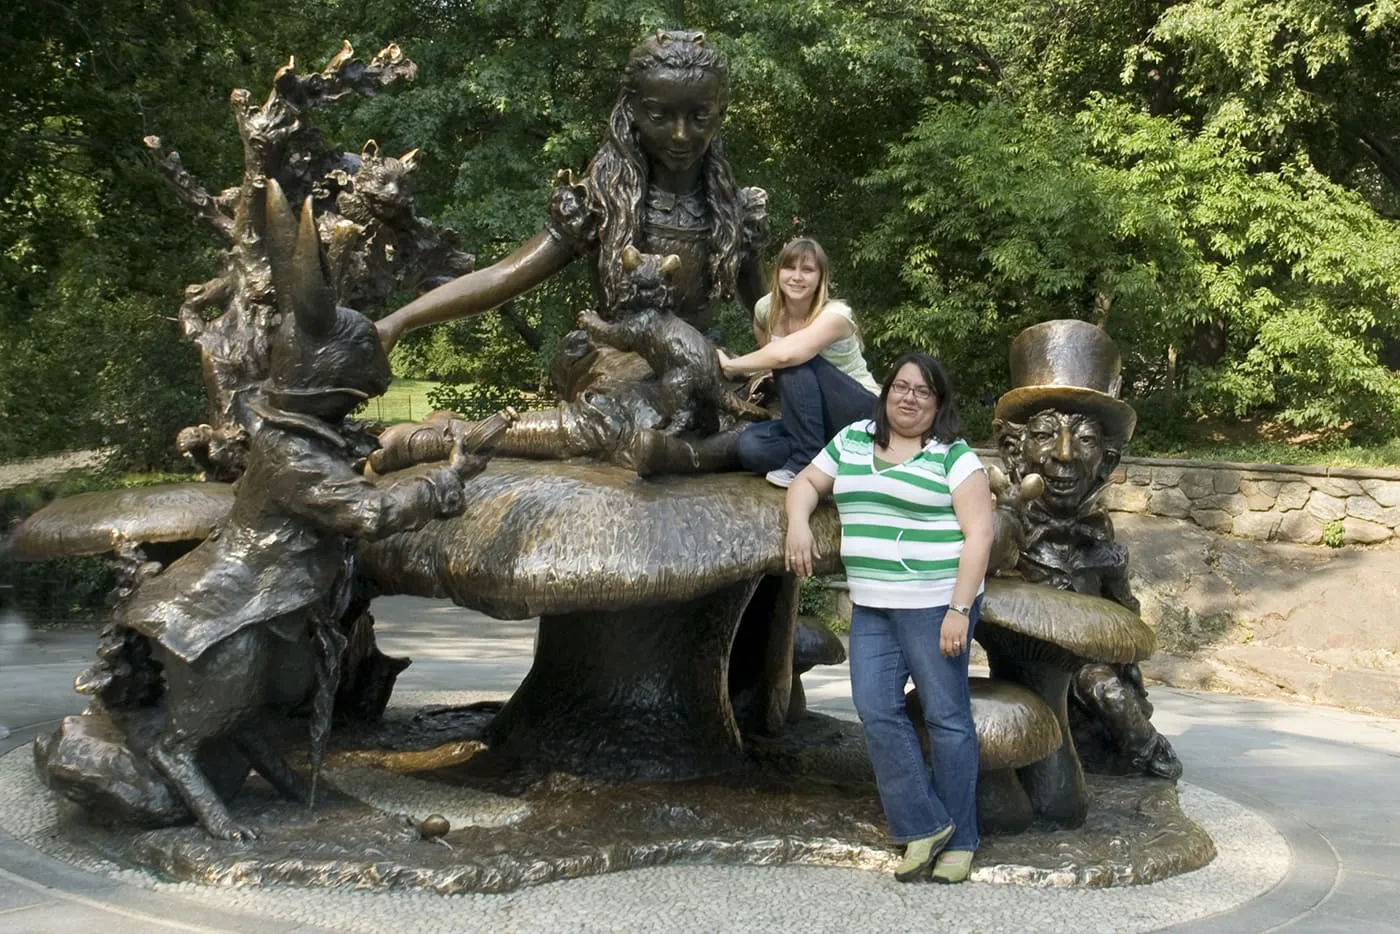 Alice in Wonderland Statue in Central Park, New York City.